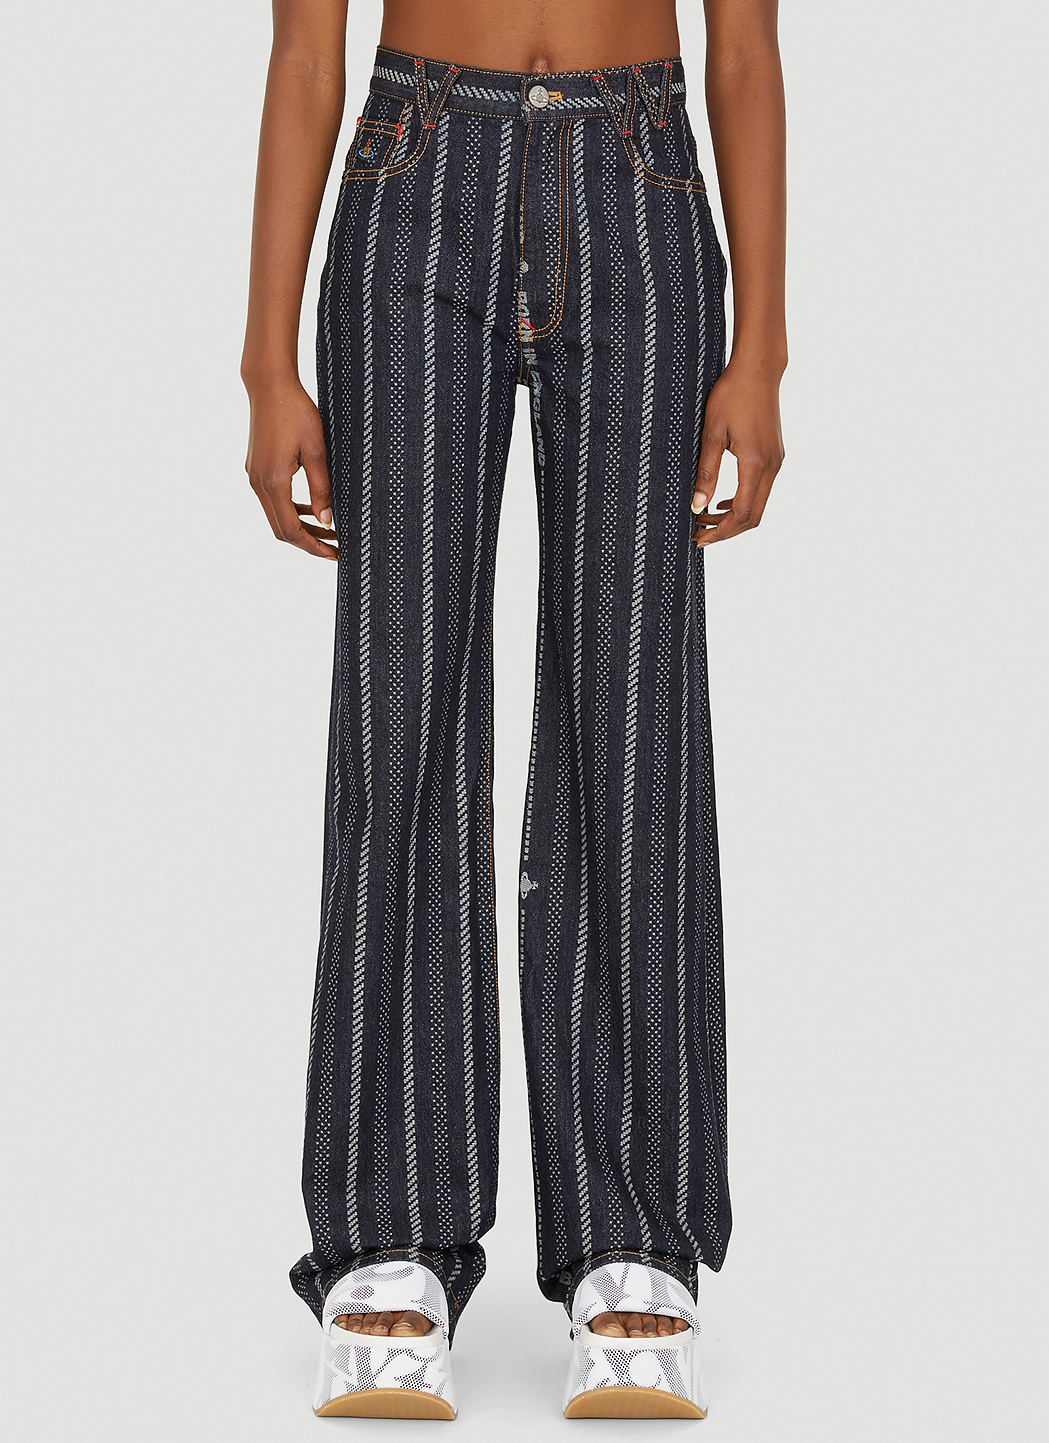 Vivienne Westwood Ray Jeans